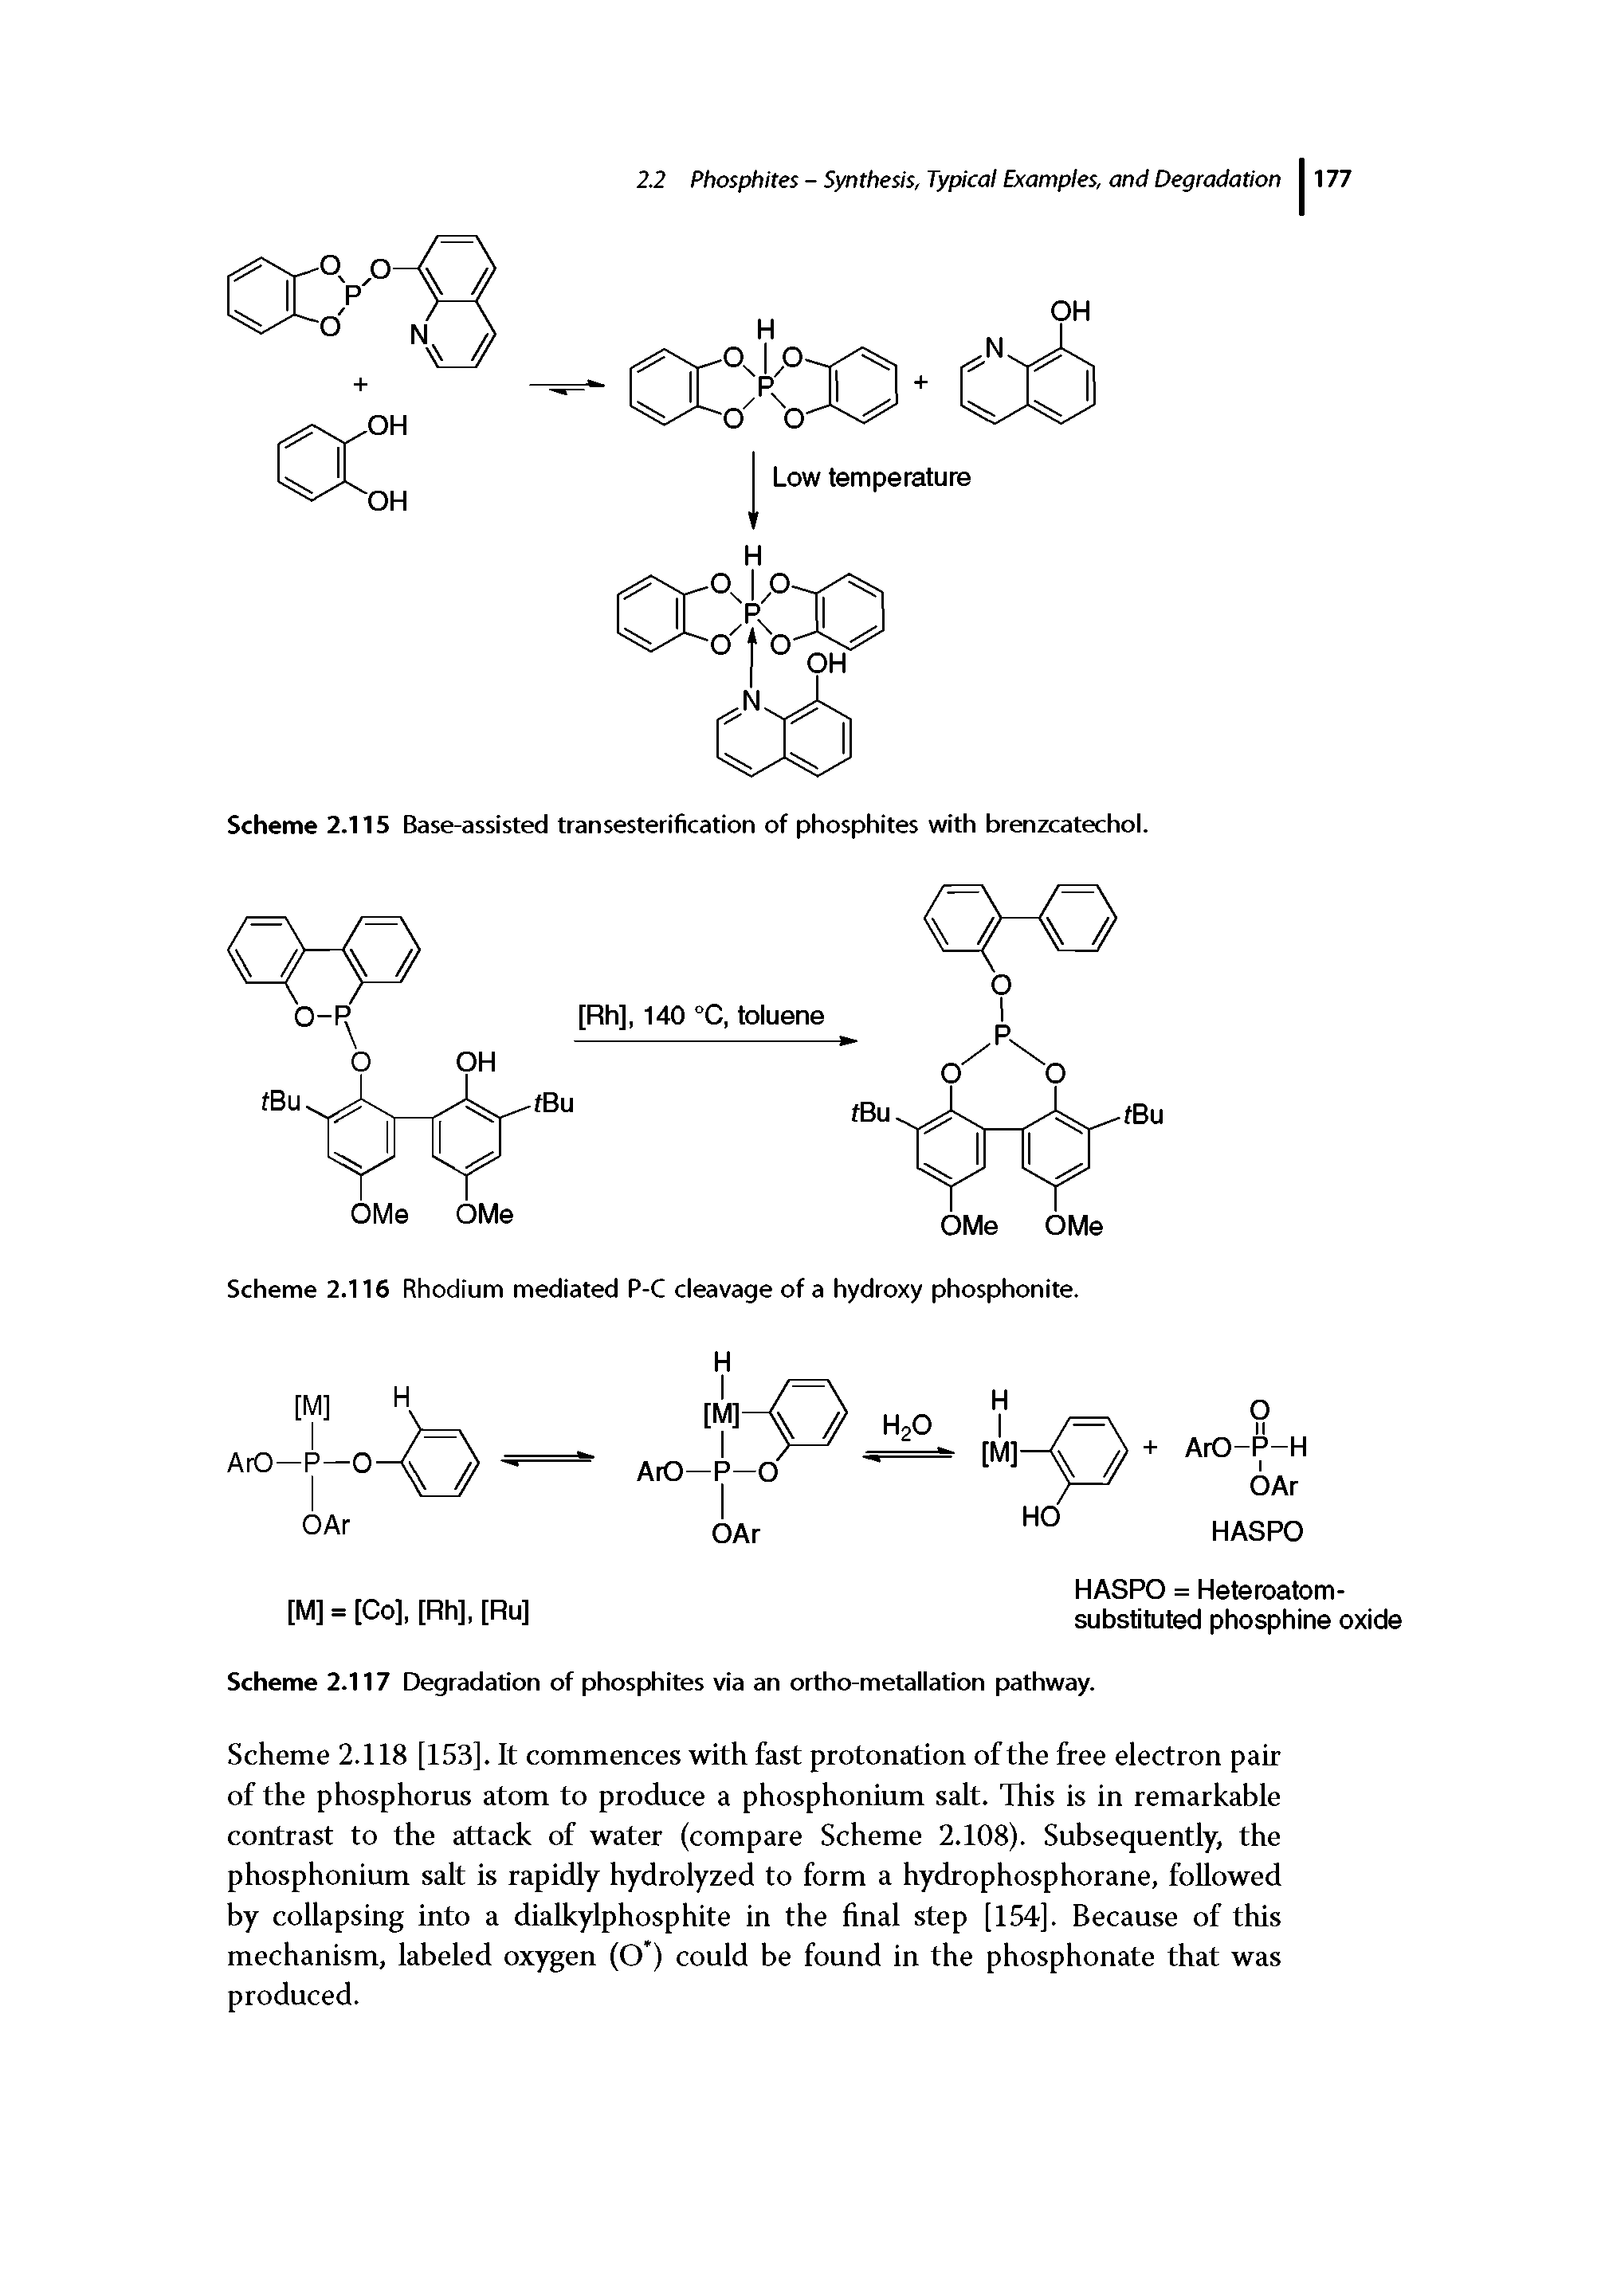 Scheme 2.117 Degradation of phosphites via an ortho-metallation pathway.